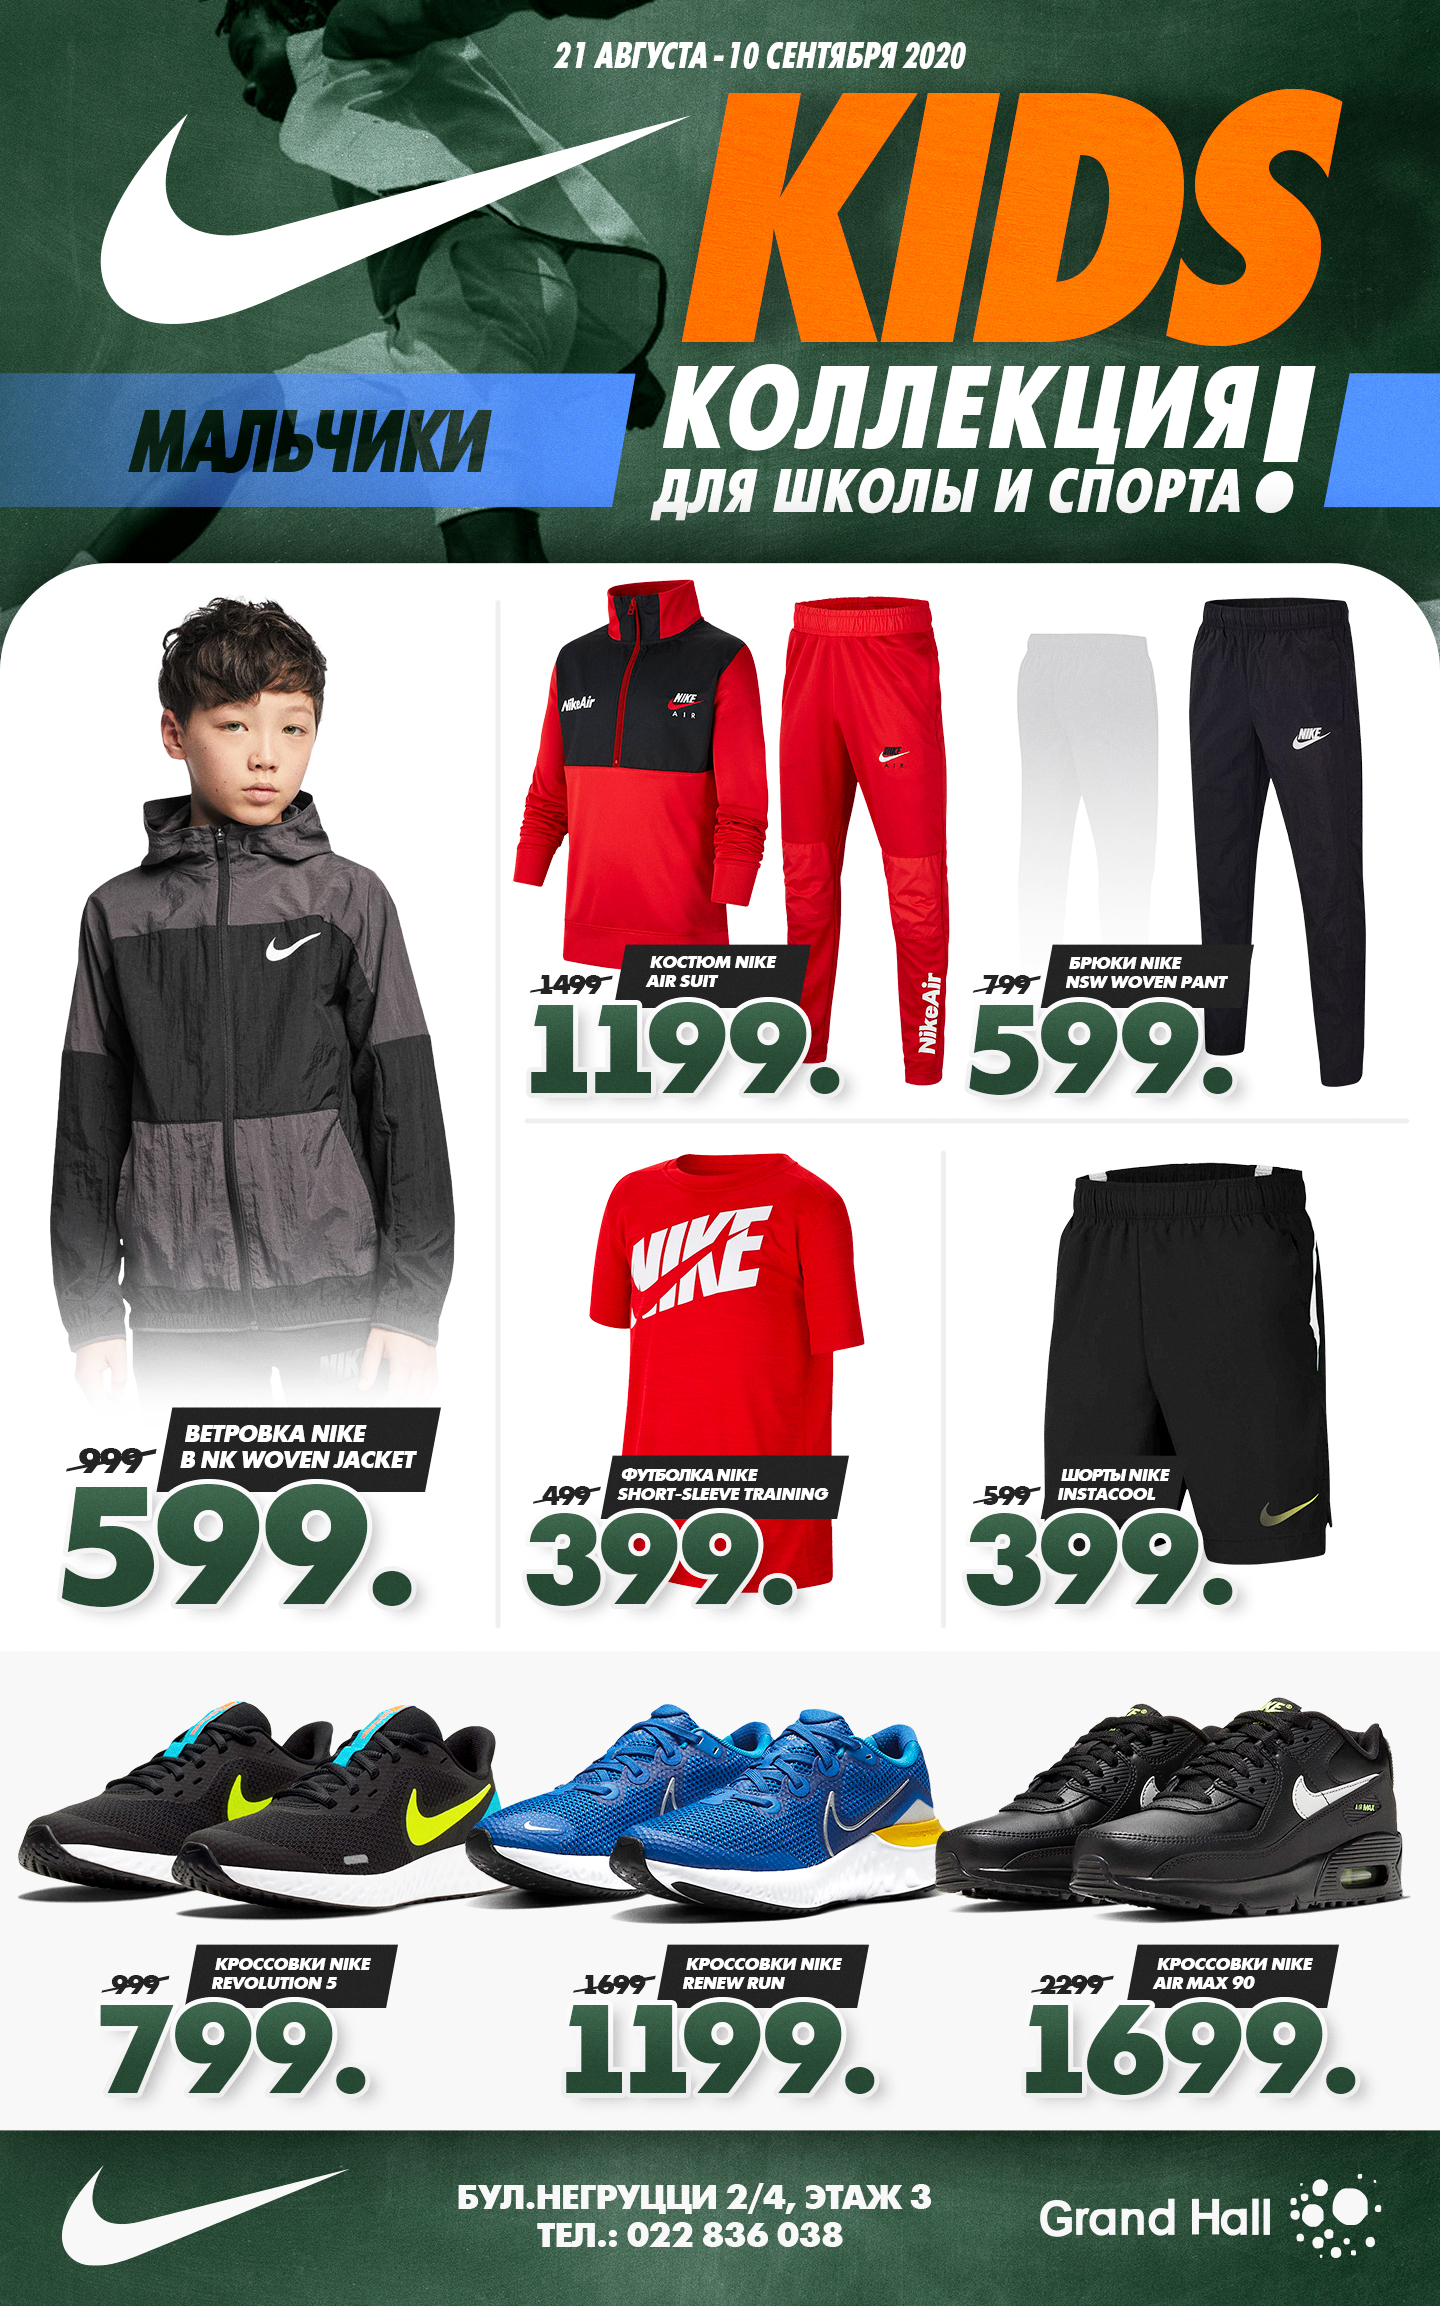 Nike Kids: Коллекция для школы и спорта по суперценам